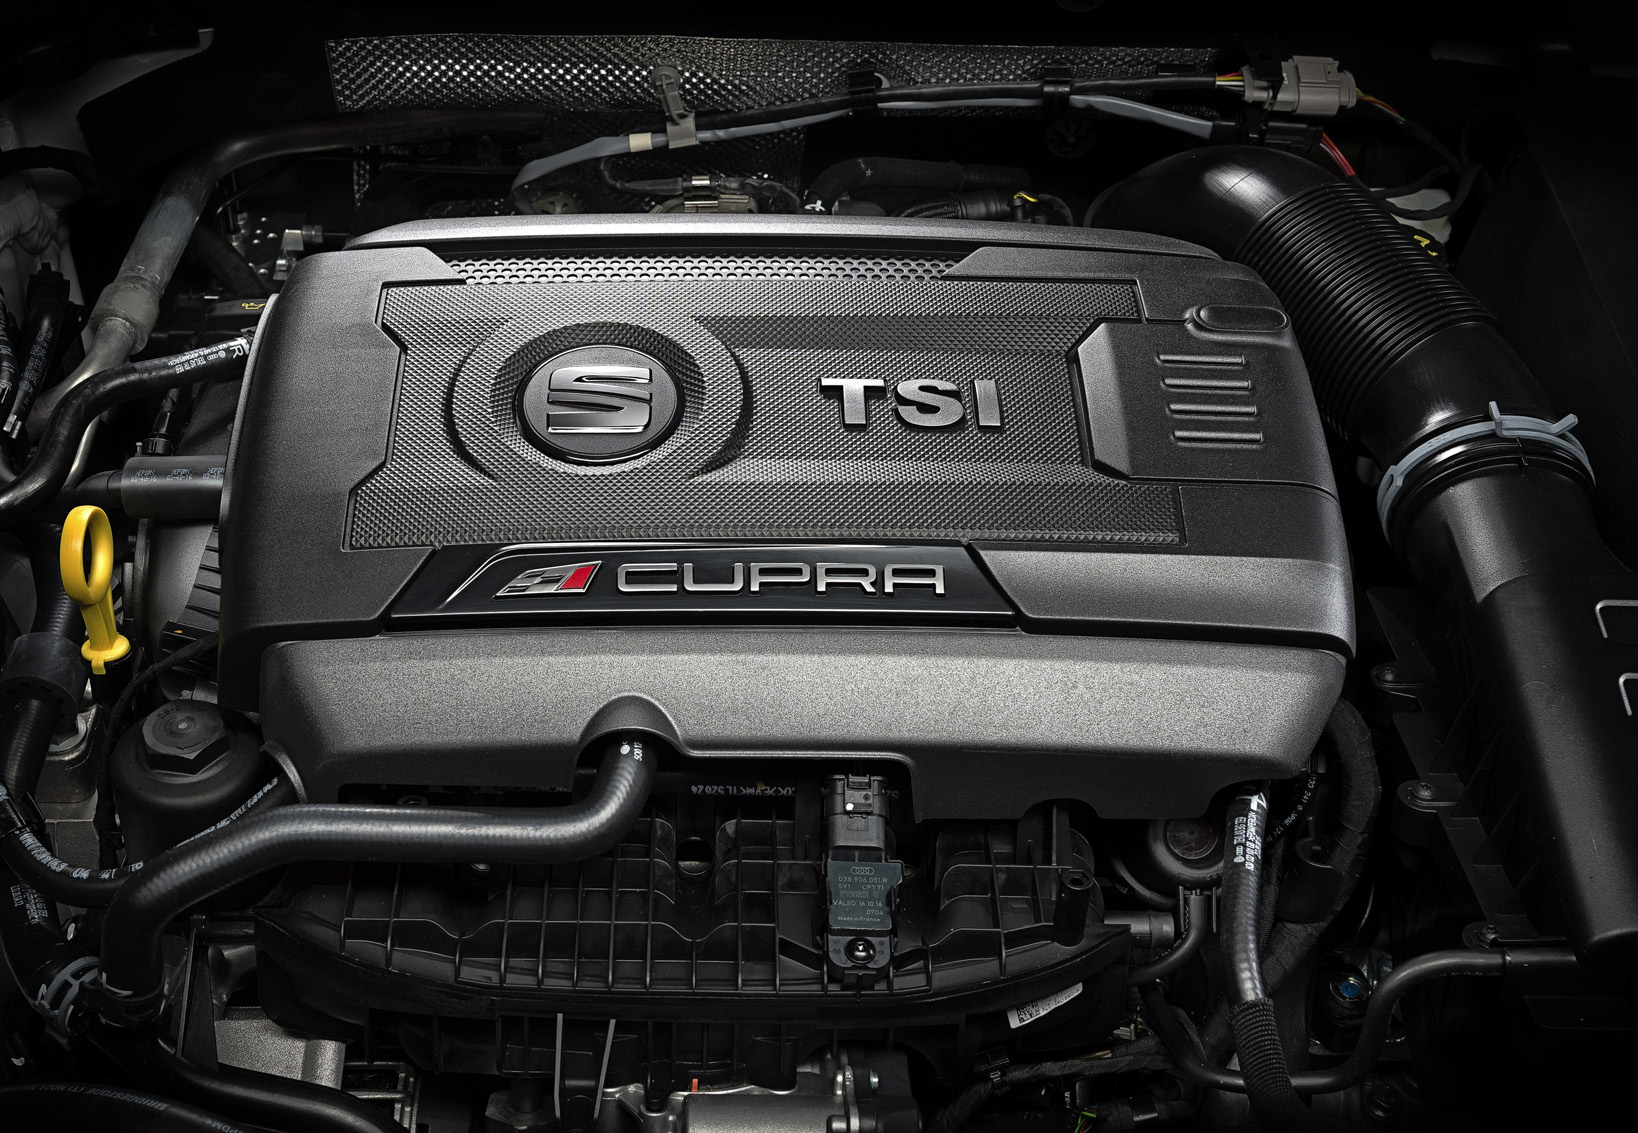 2.0-litre TSI Seat Leon Cupra engine